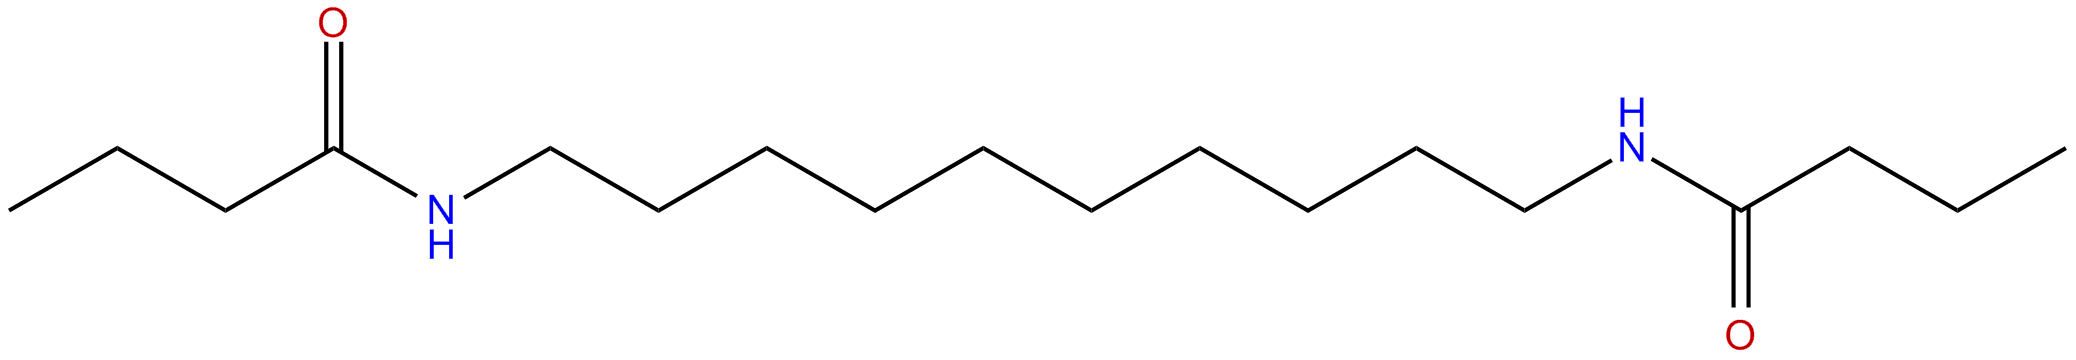 Image of N,N'-1,10-decanediylbisbutanamide